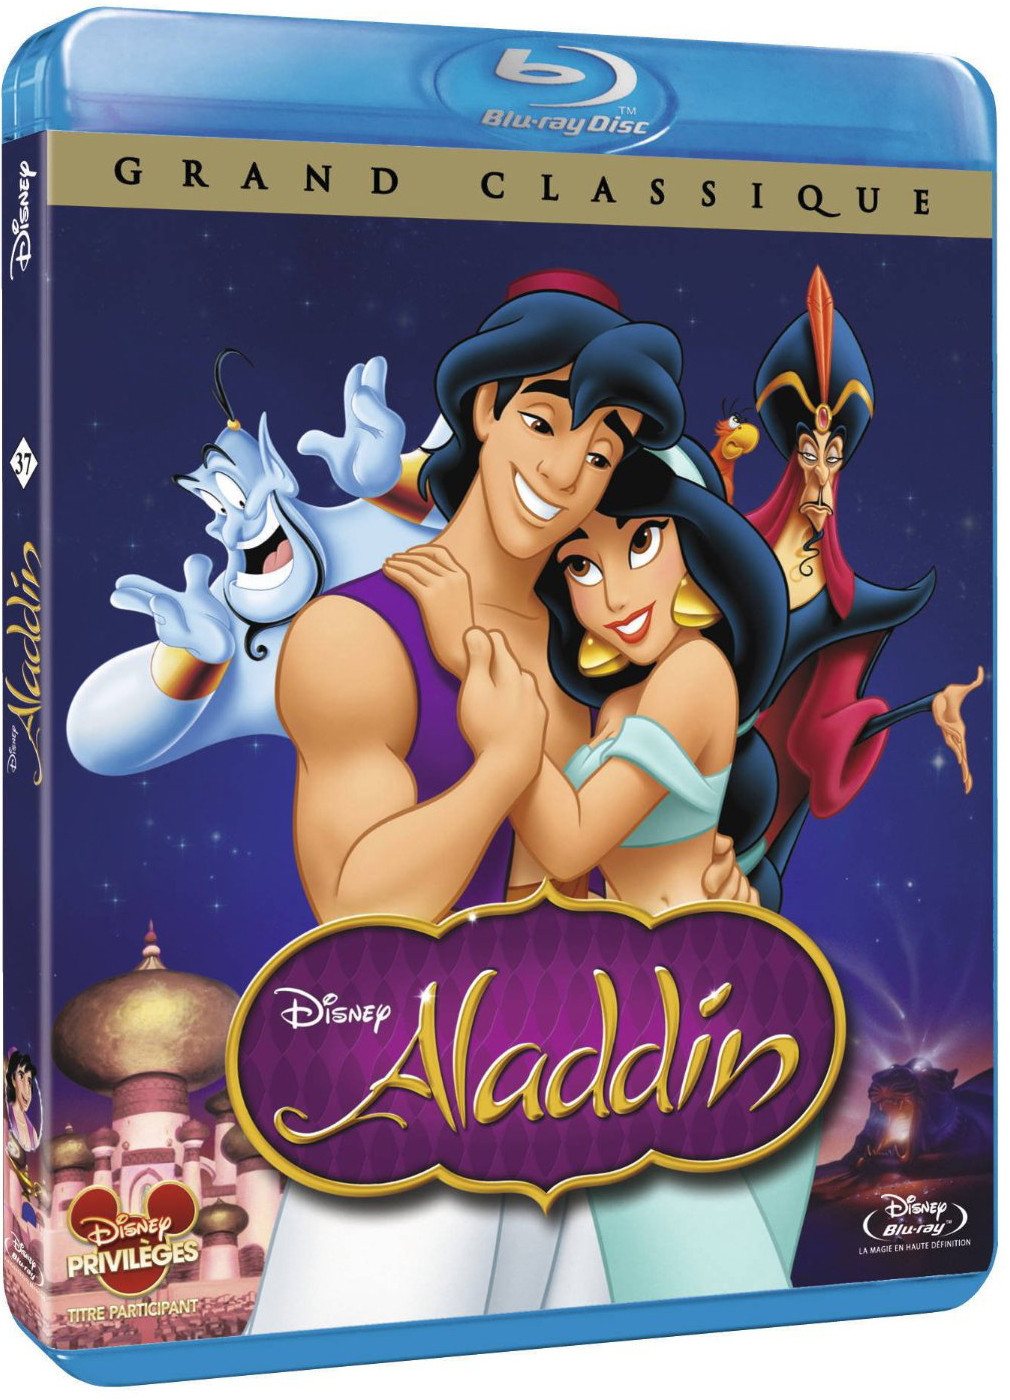 [阿拉丁].Aladdin.1992.CHN.BluRay.1080p.AVC.DTS-HD.MA.7.1-CrsS   39.65G  C8 l, q5 [% C-1.jpg